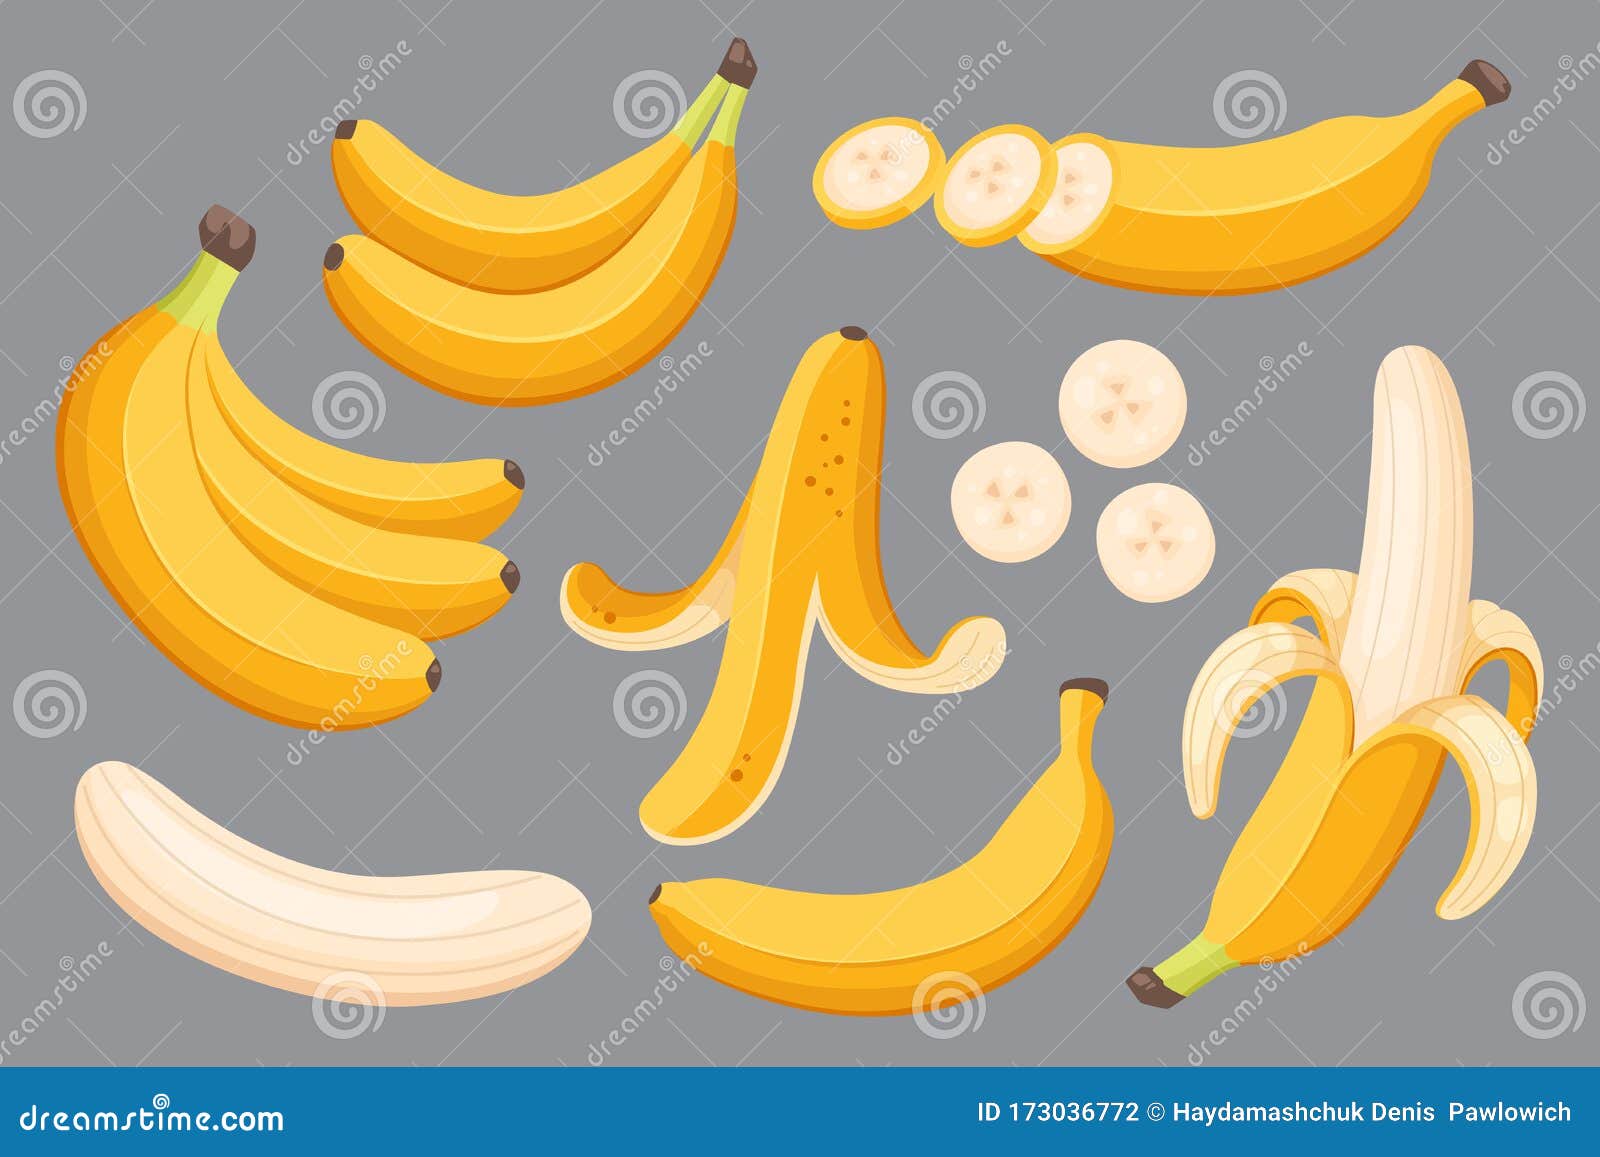 Cartoon banana fruits. Bunches of fresh bananas vector illus